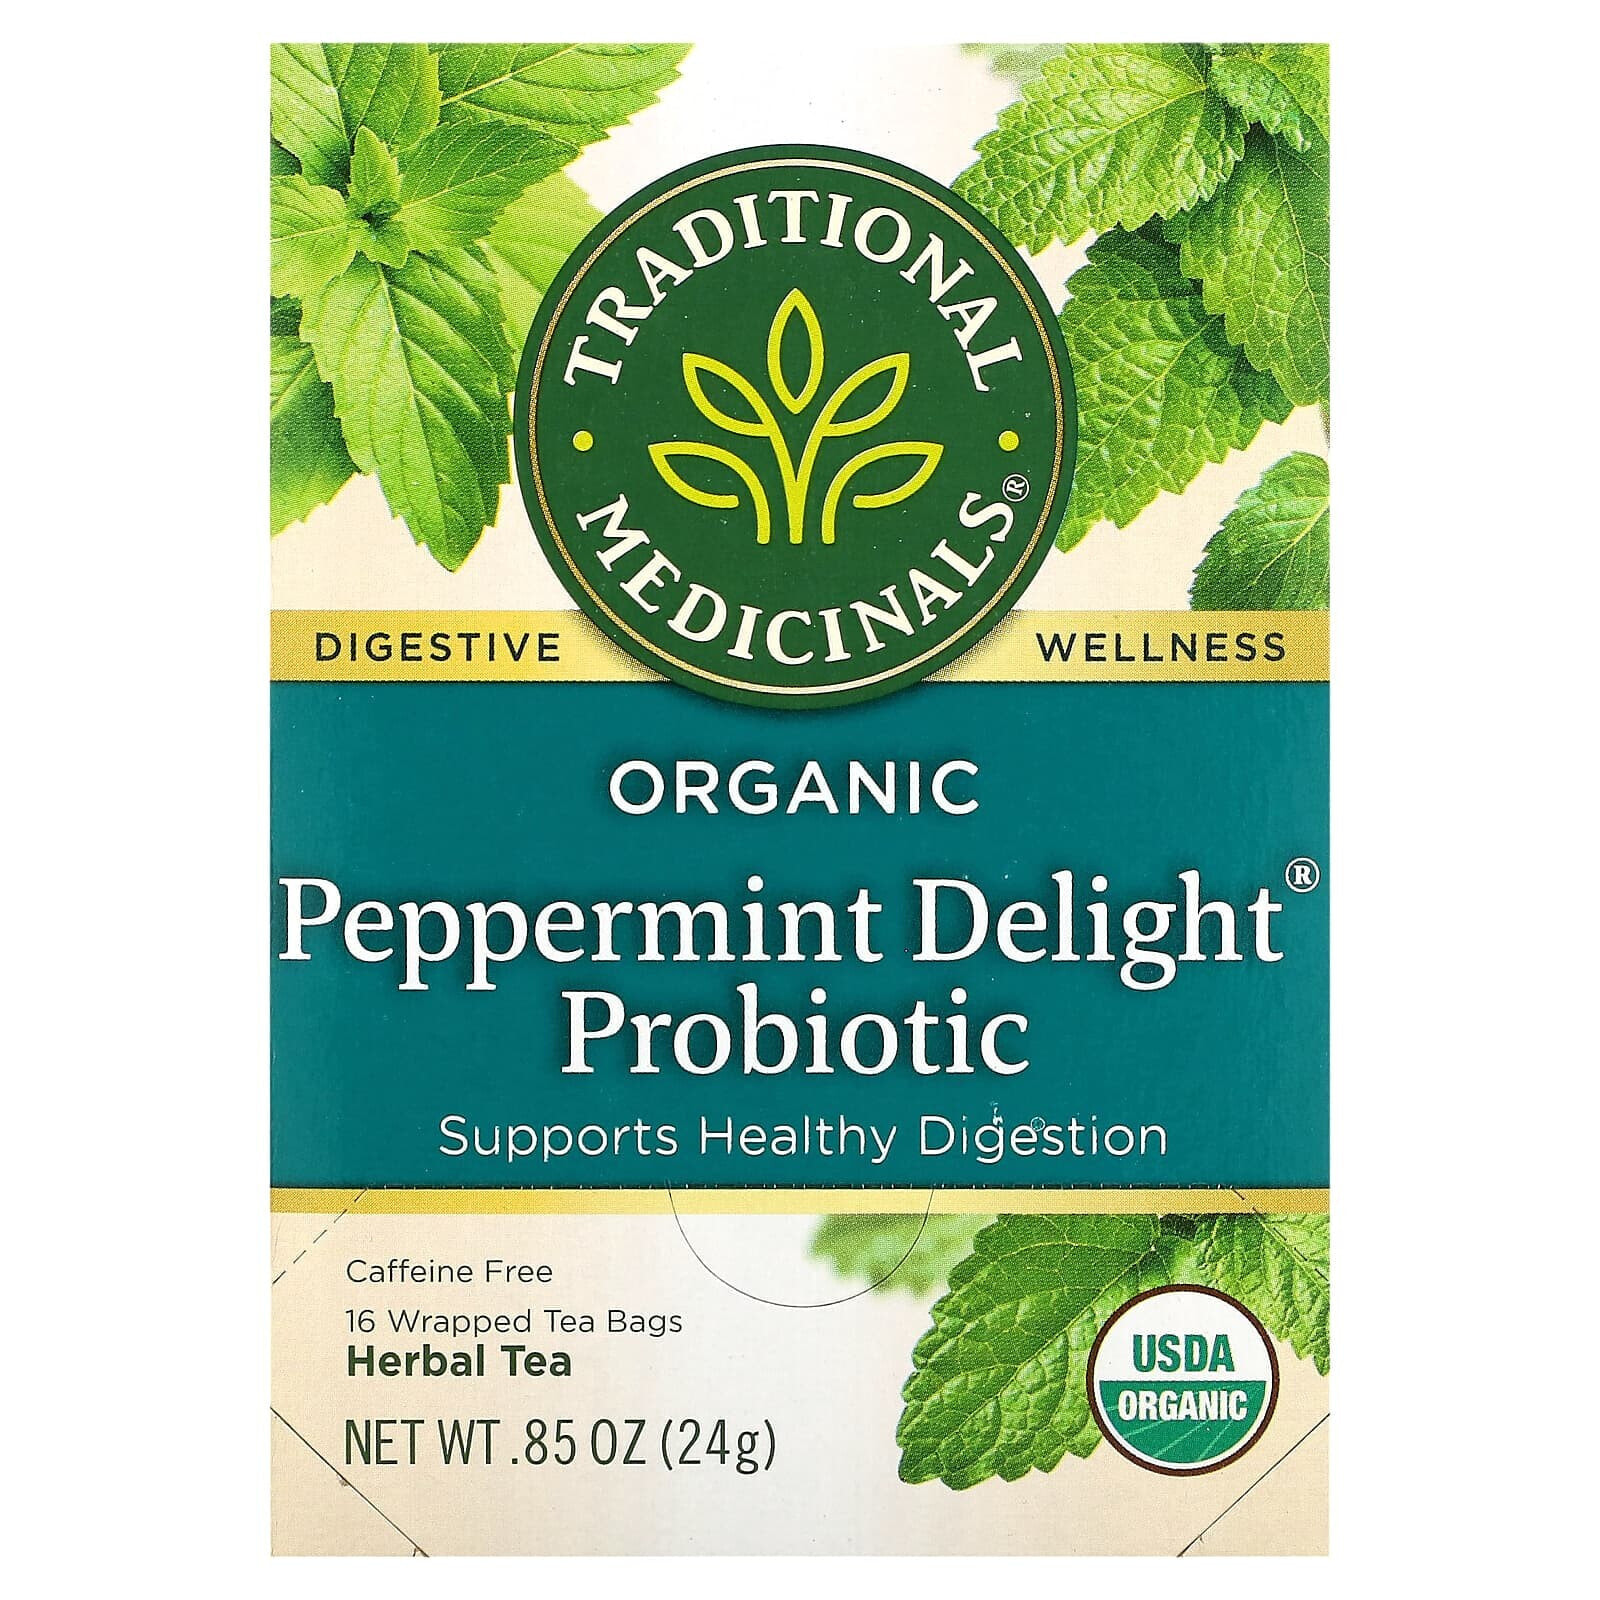 Organic Dandelion Chai Probiotic, Caffeine Free, 16 Wrapped Tea Bags, 1.19 oz (33.6 g)